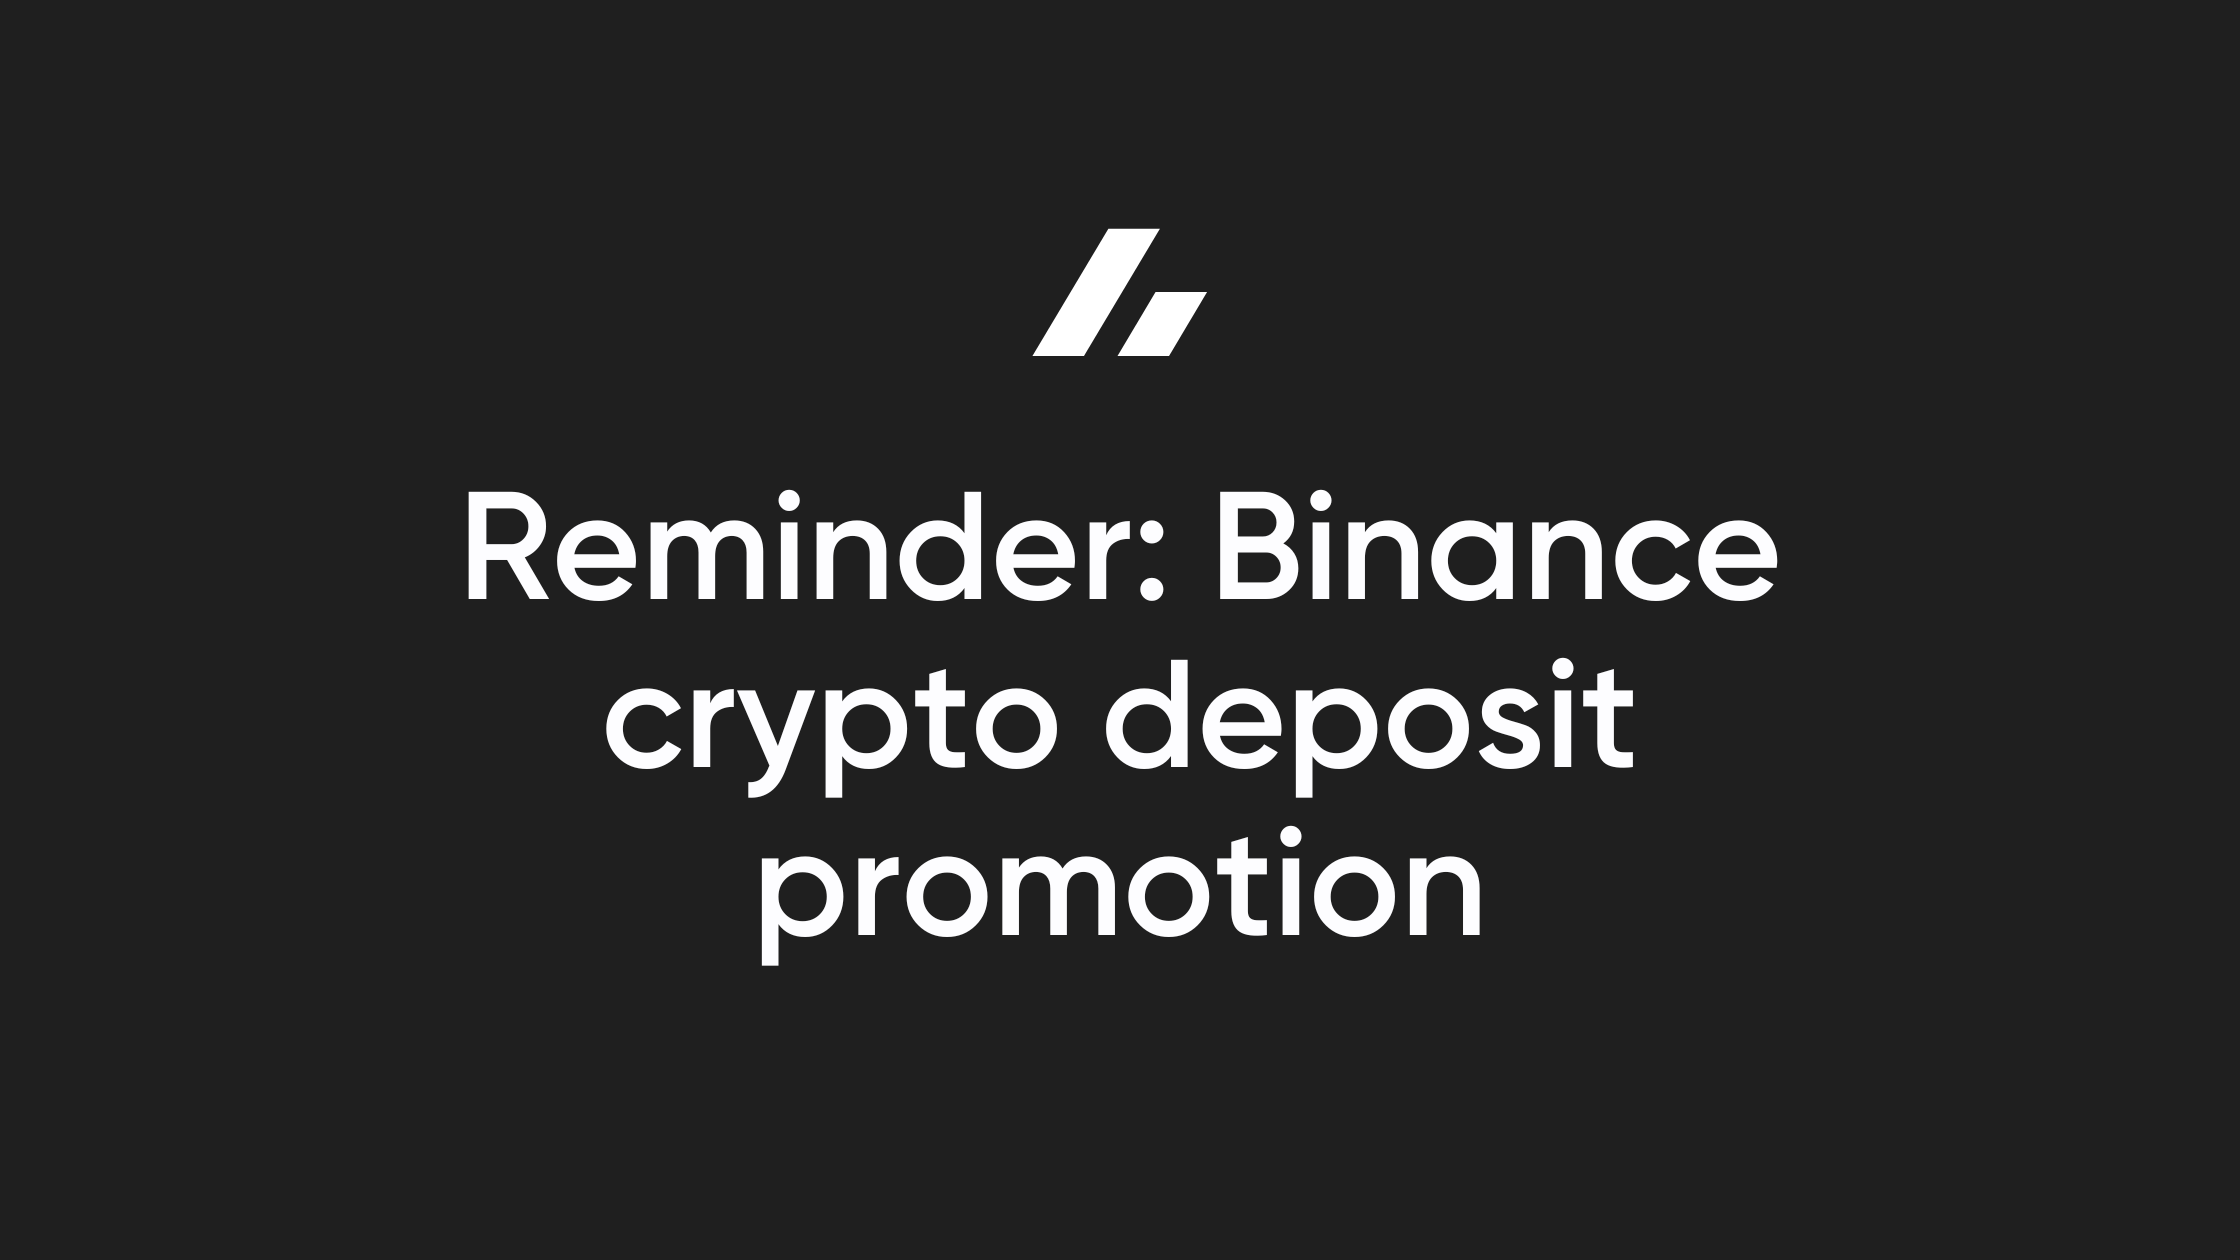 Reminder: Binance crypto deposit promotion